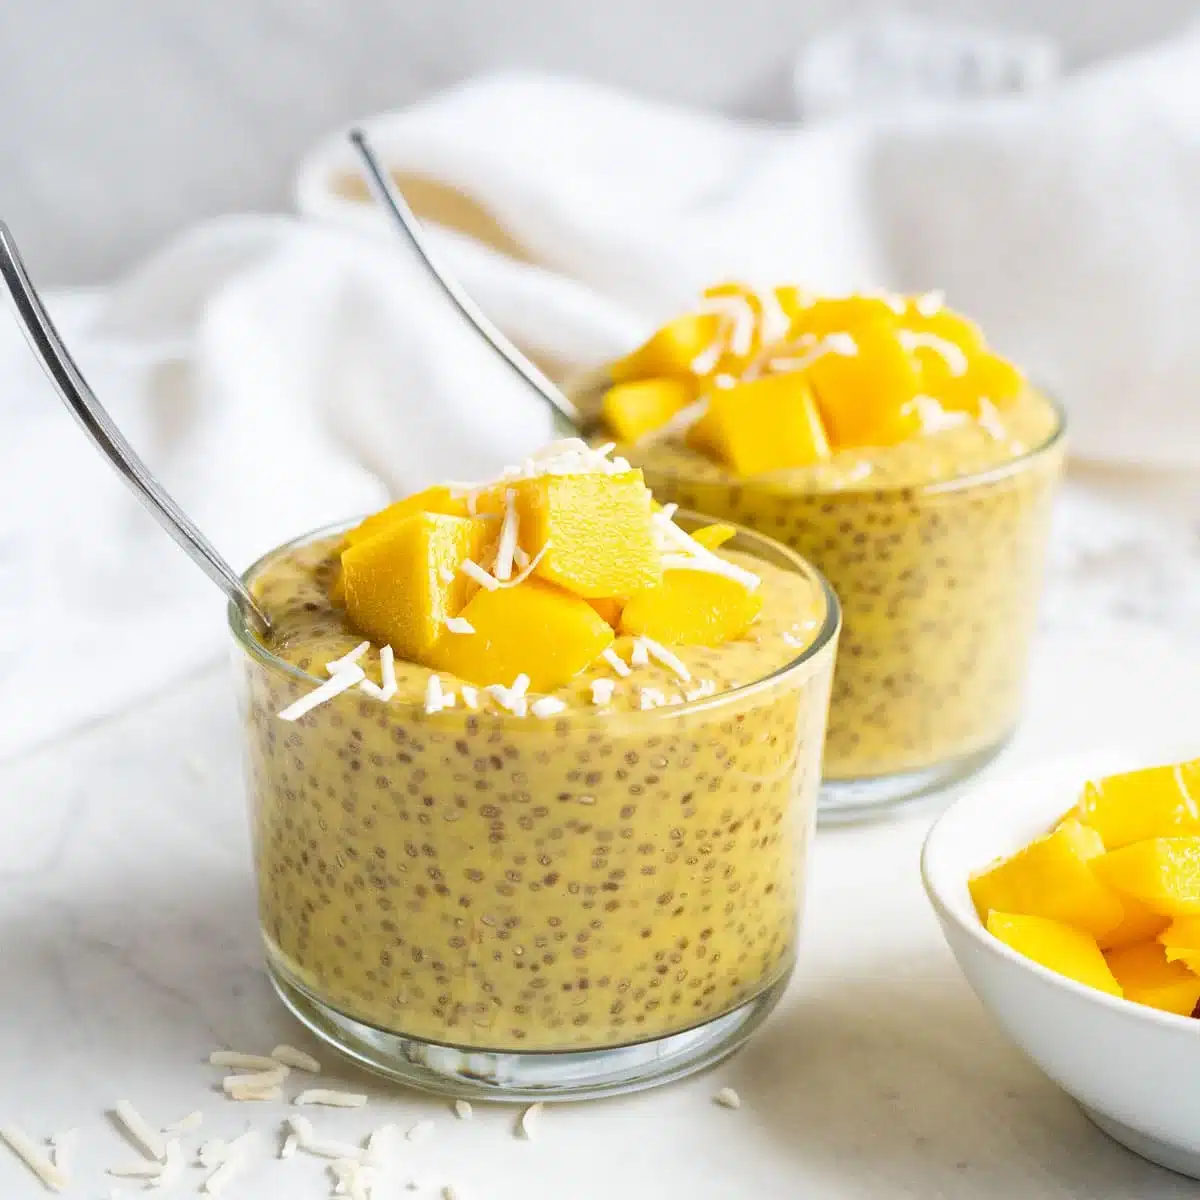 13. Recipe for Mango Chia Seed Pudding: 